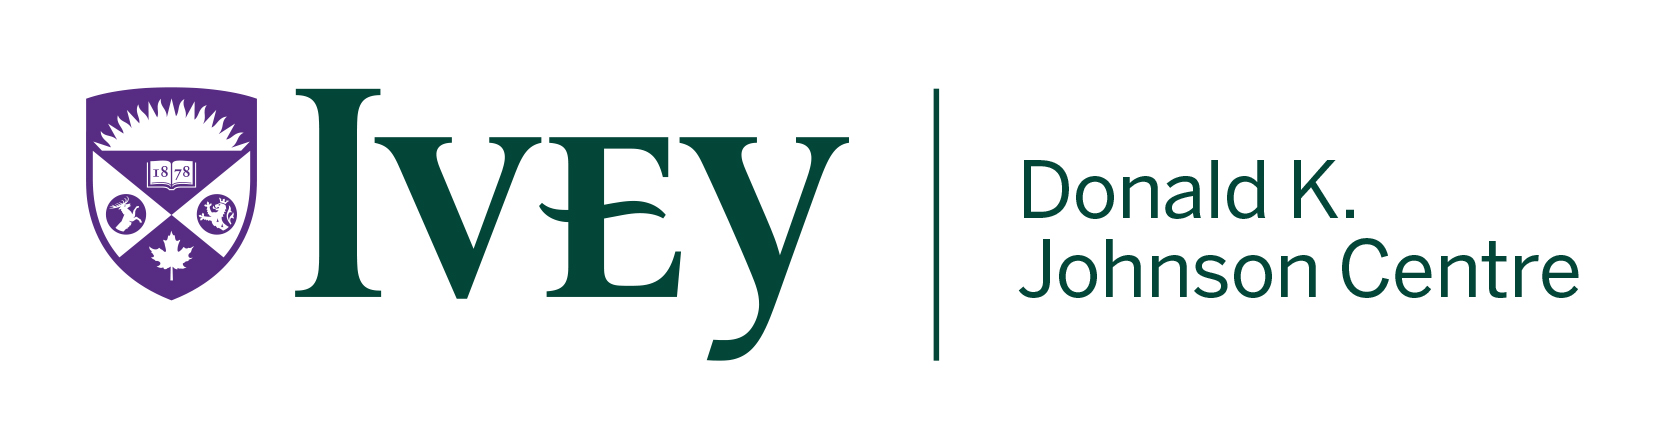 Ivey Donald K Johnson Centre Logo